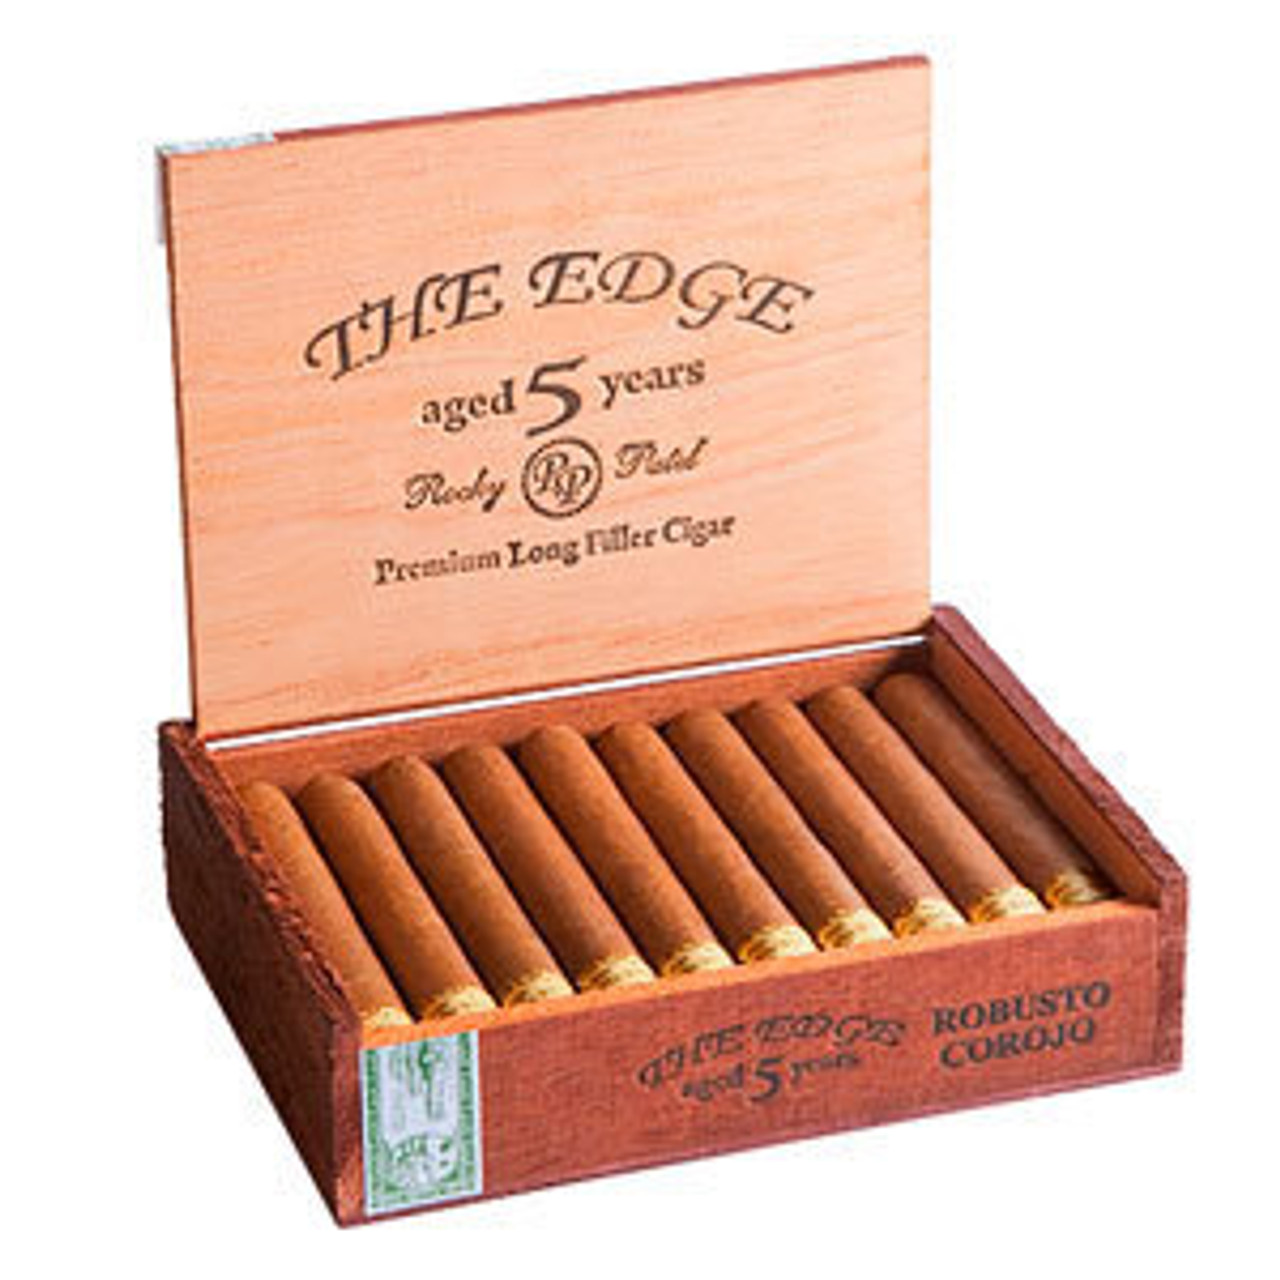 Rocky Patel The Edge Corojo Toro Cigars - 6 x 52 (Box of 20) Open